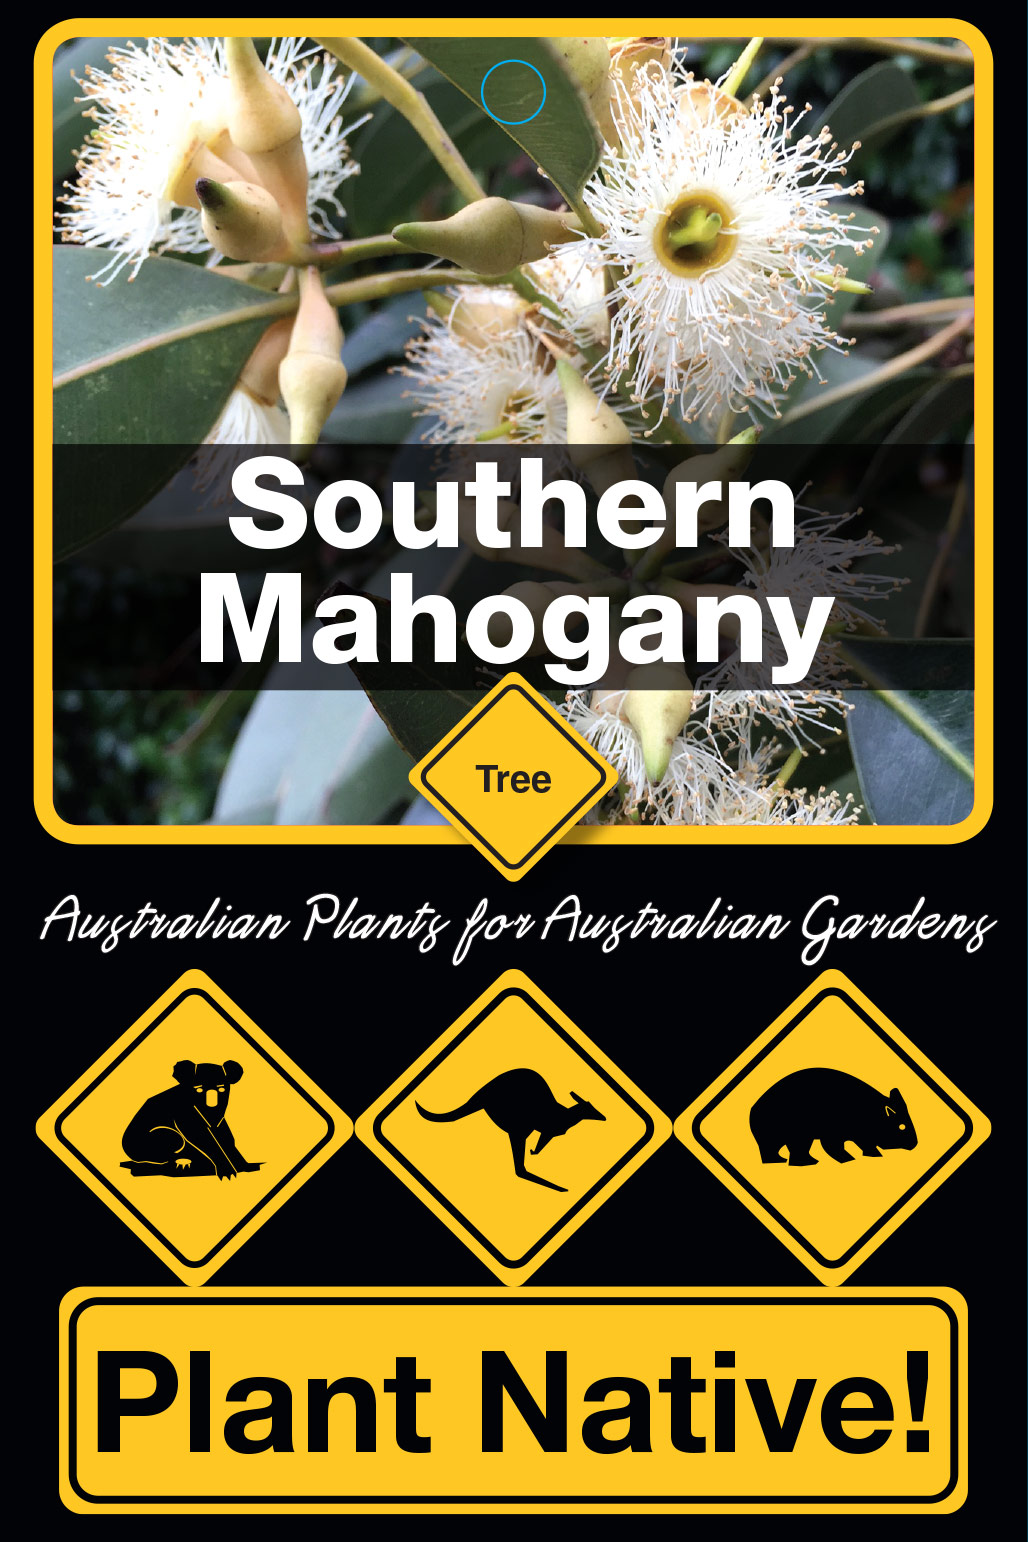 Southern Mahogany - Plant Native!